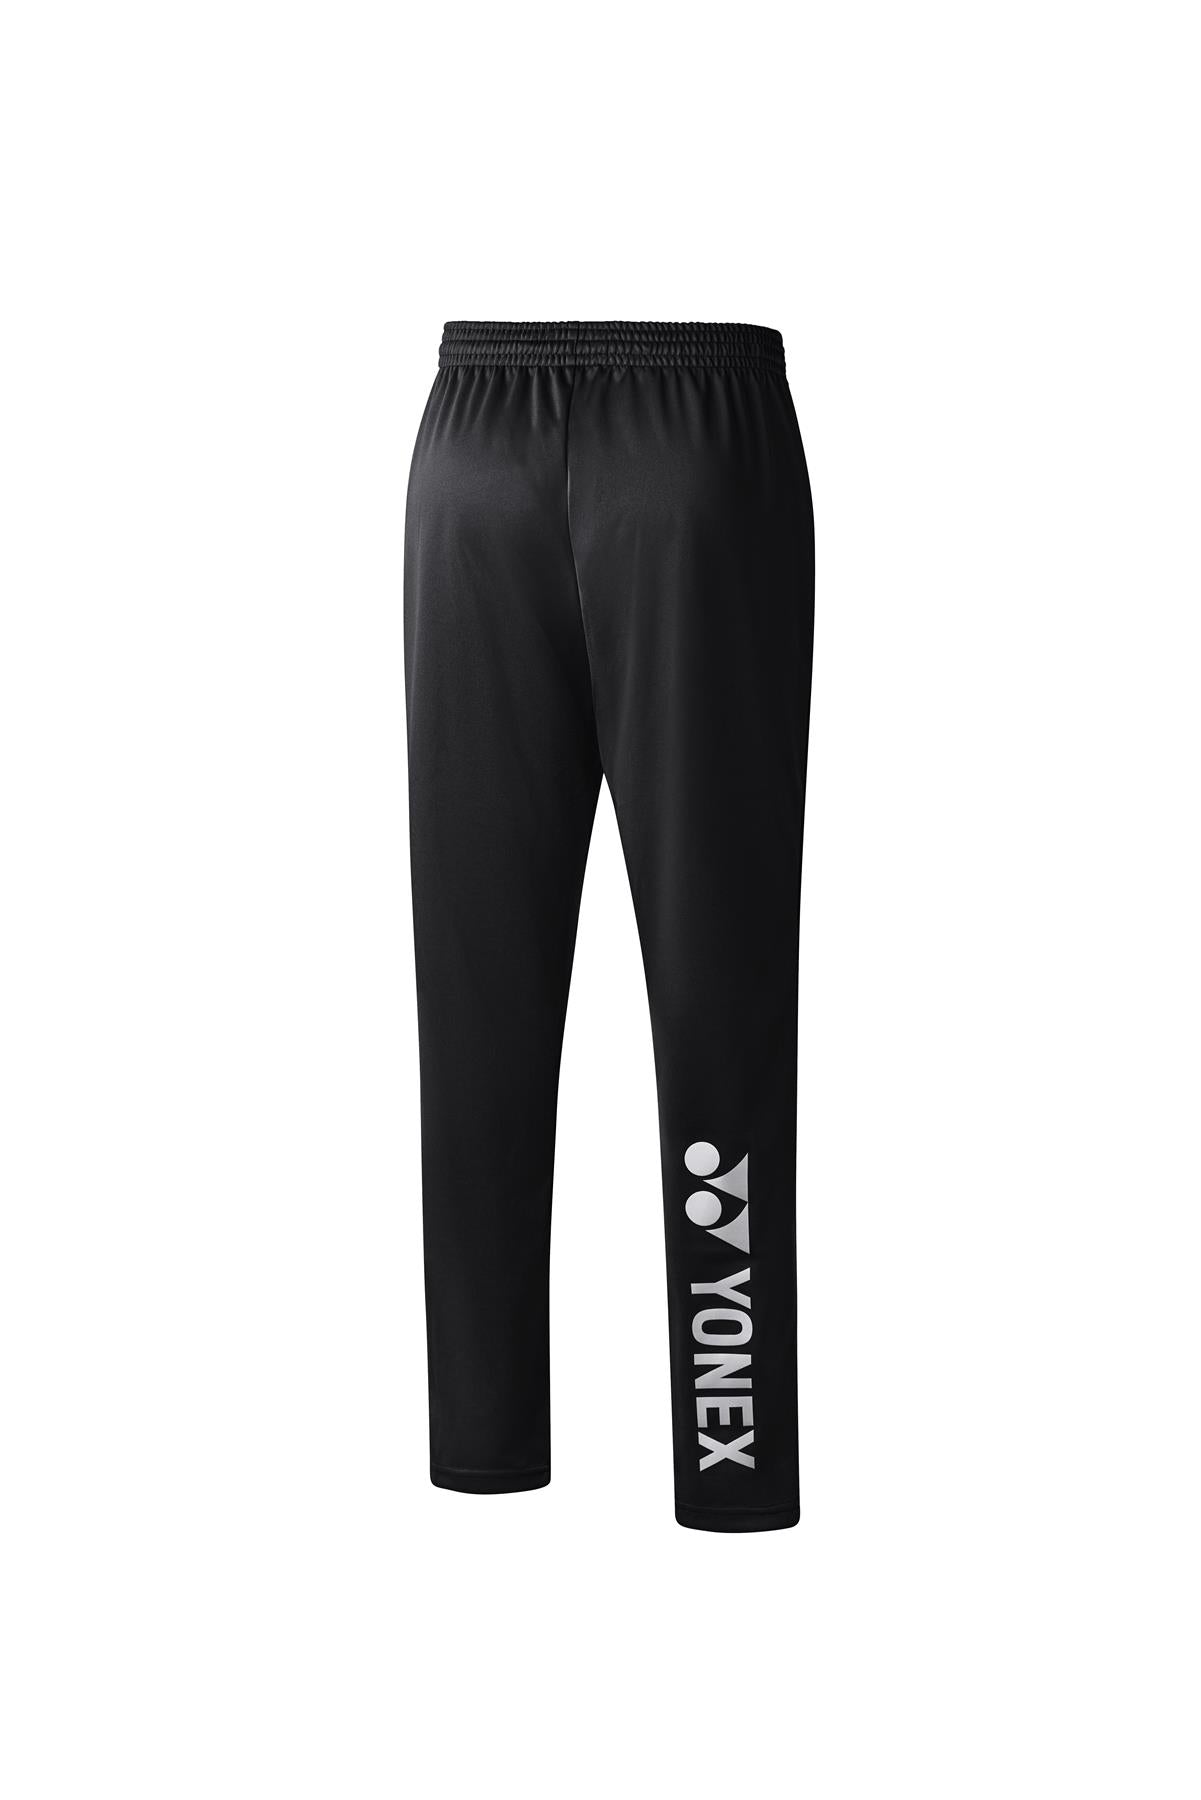 Yonex YTP123 Unisex Tennis Tracksuit Pants - Black - Back